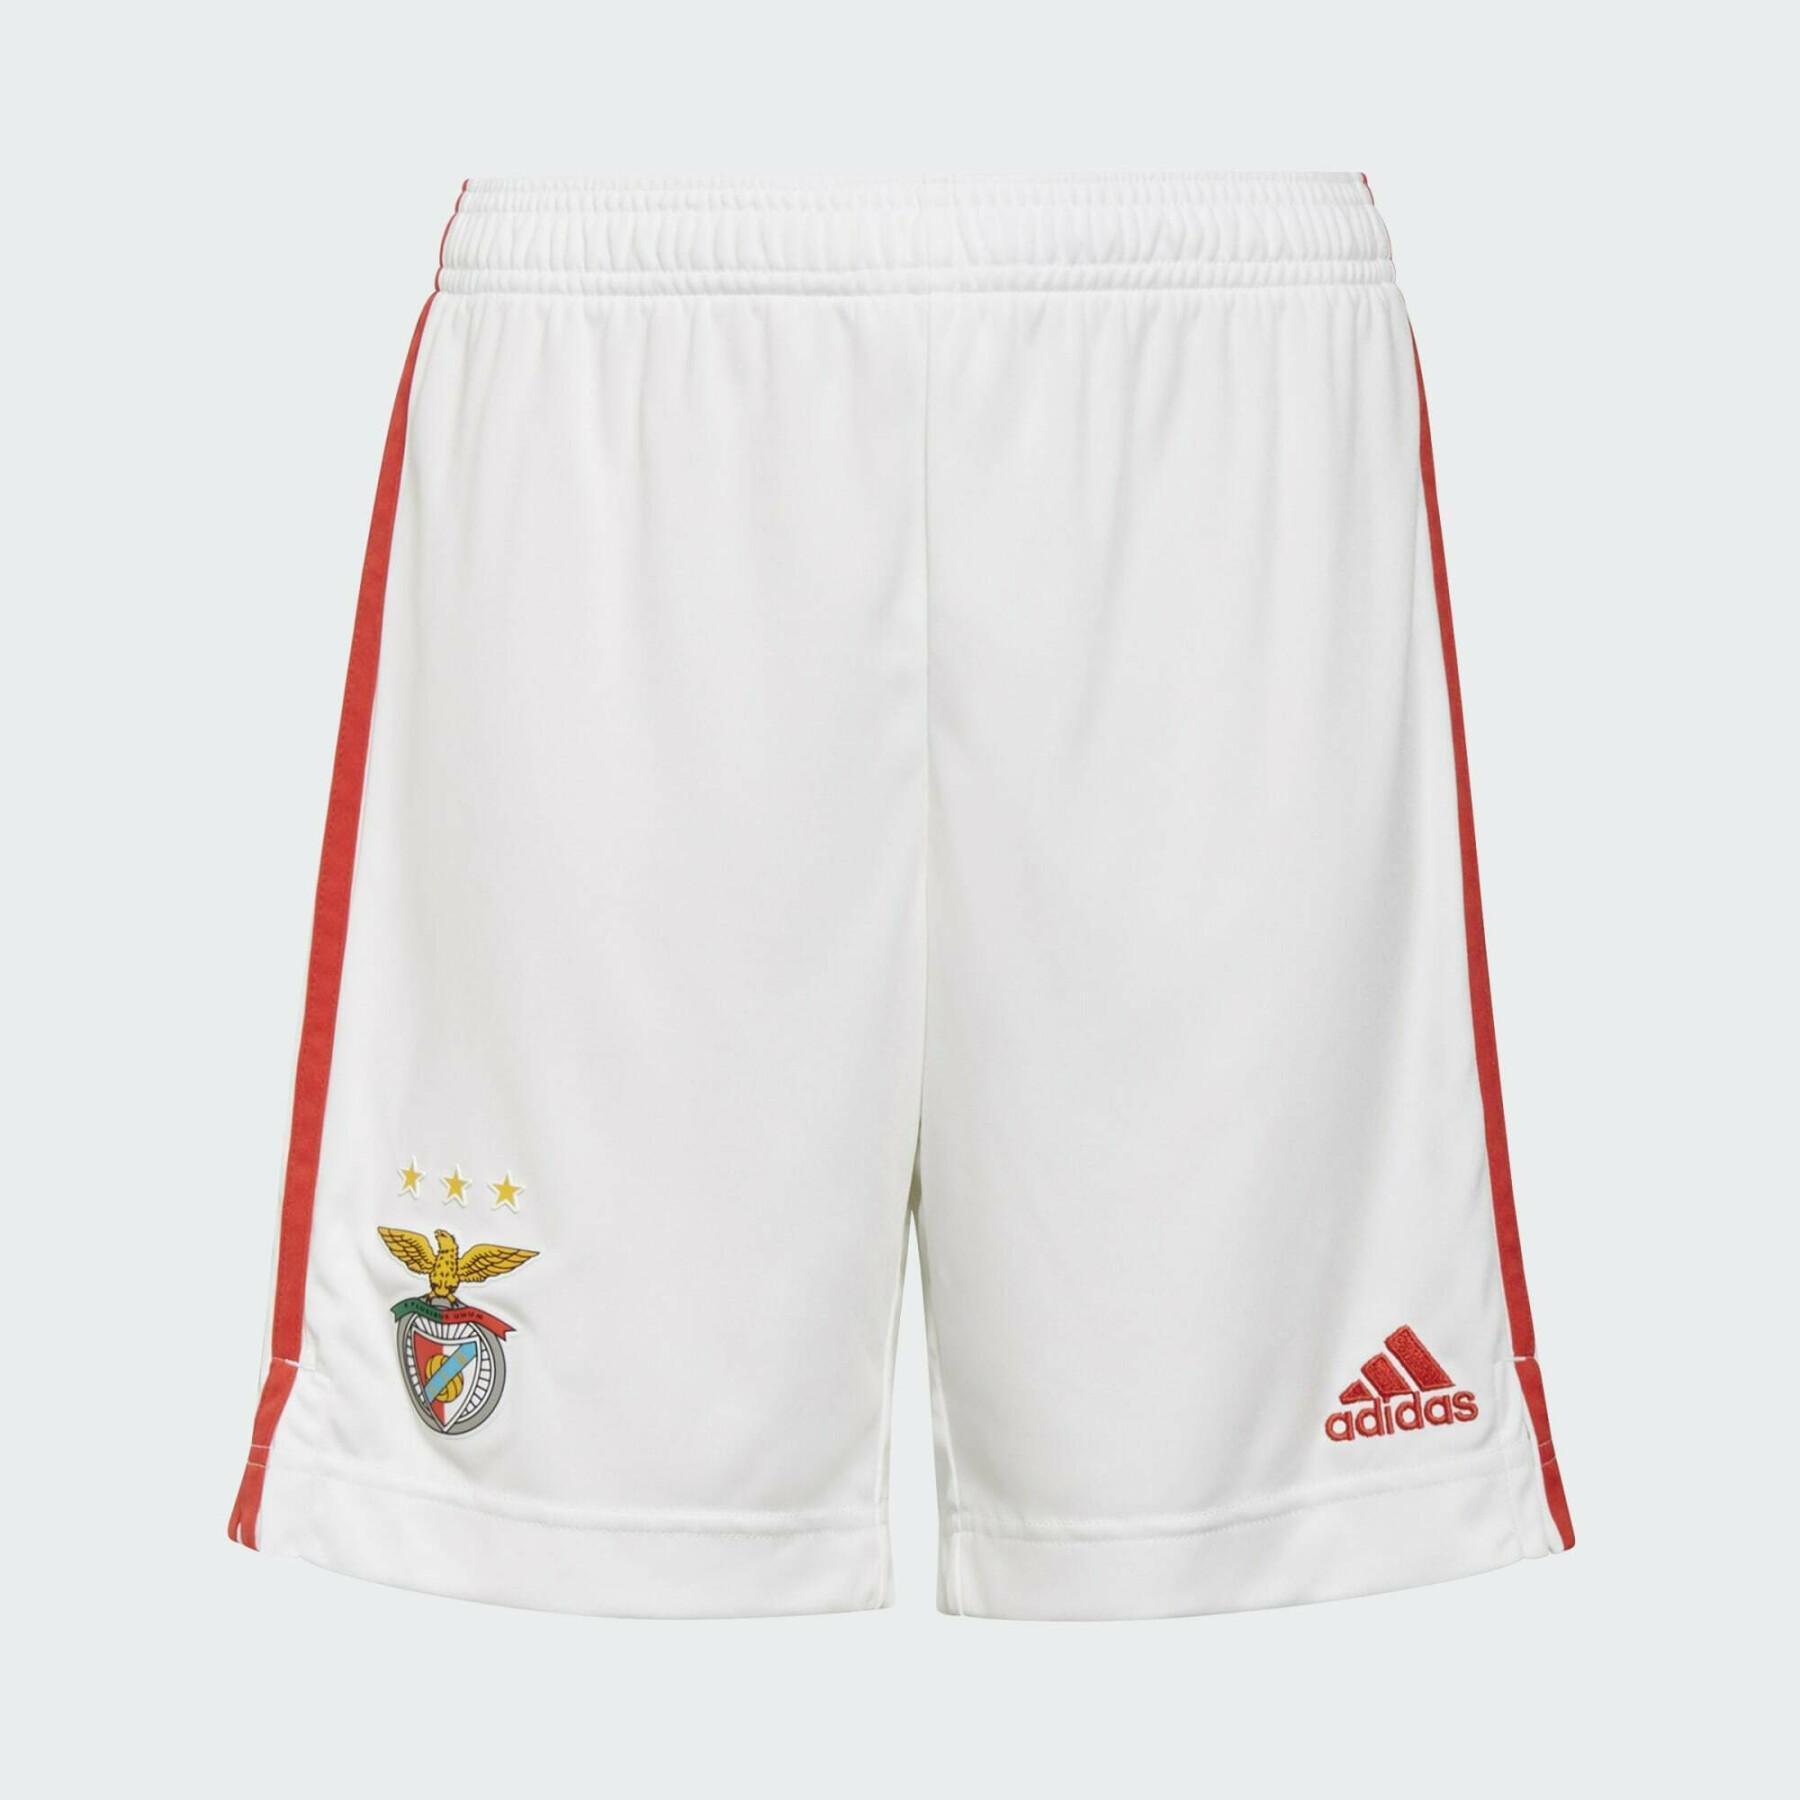 Barnens shorts i hemmet Benfica 2021/22